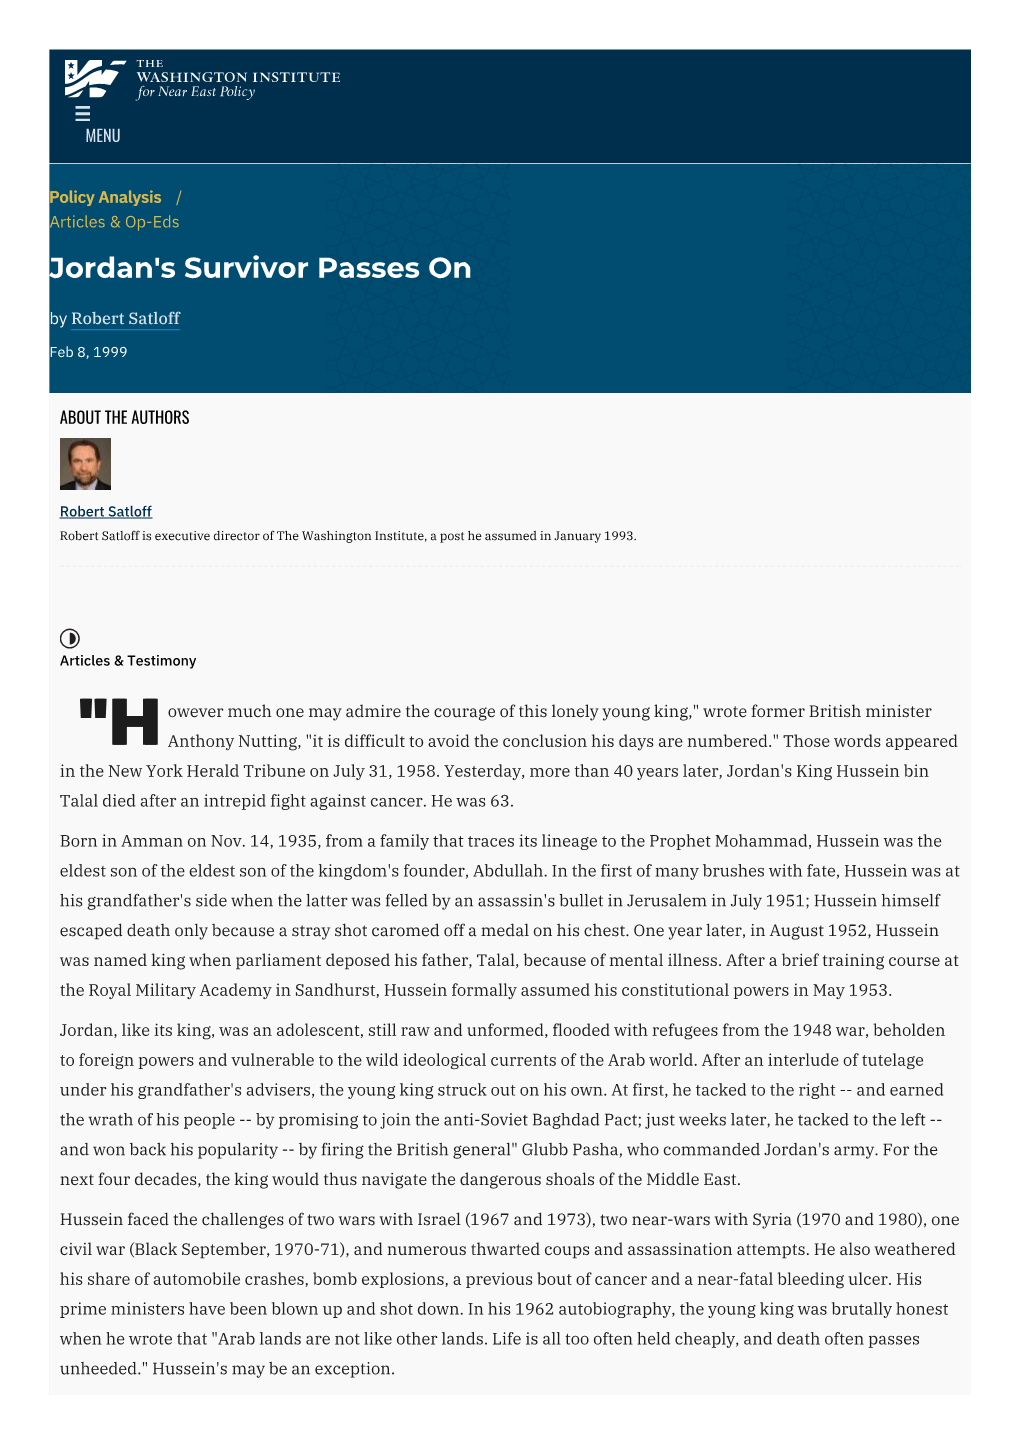 Jordan's Survivor Passes on | the Washington Institute